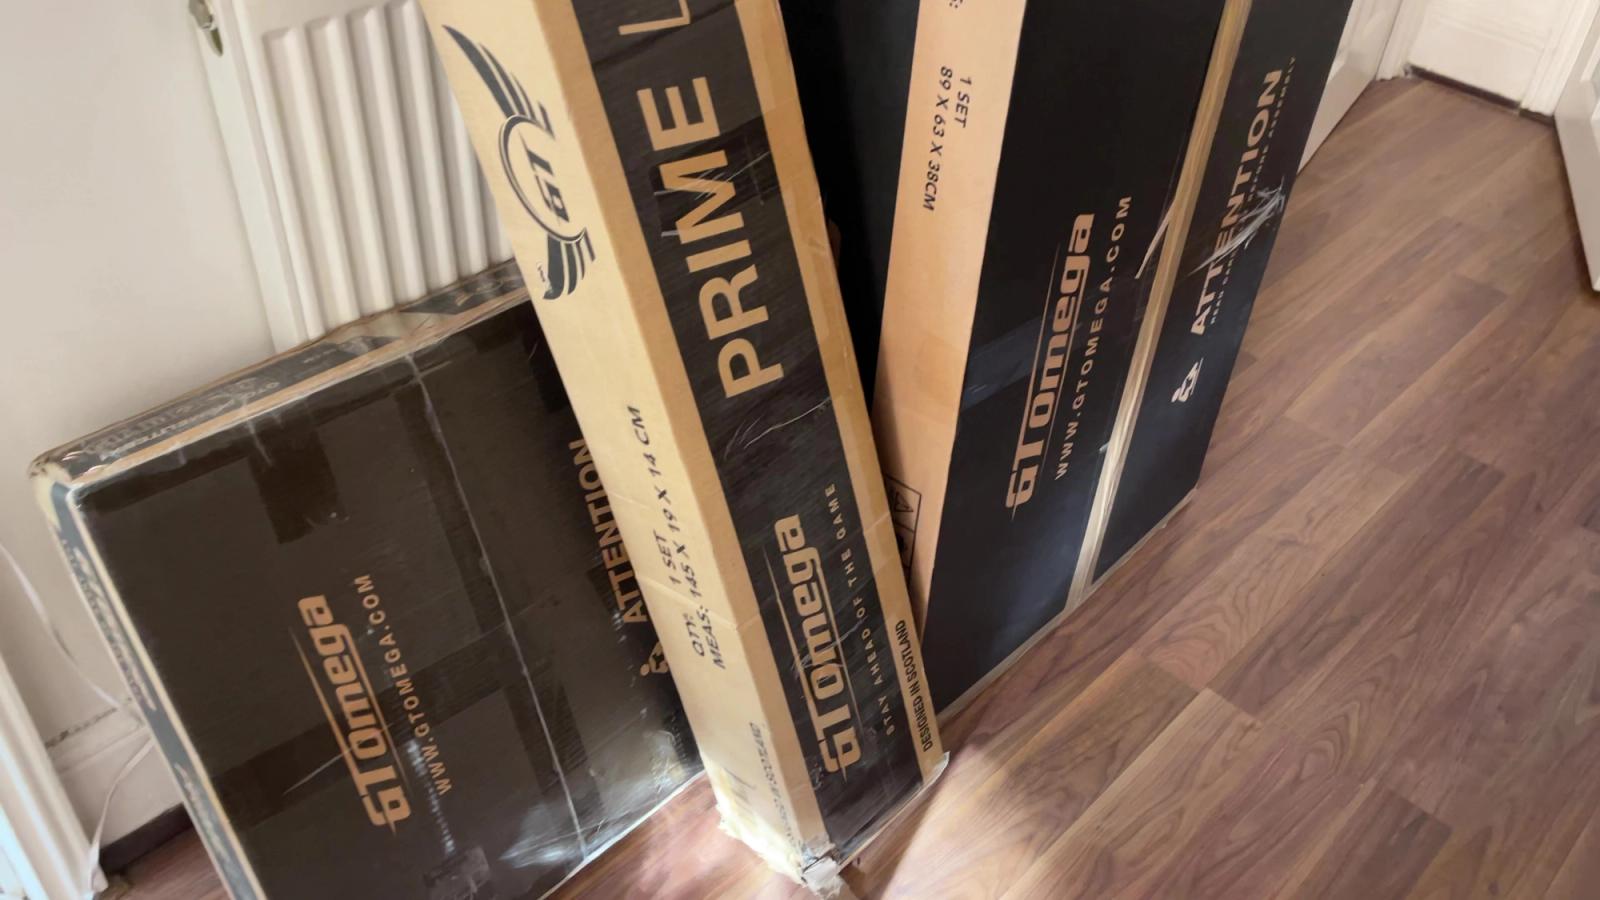 GT Omega Prime Lite arrived in three big boxes